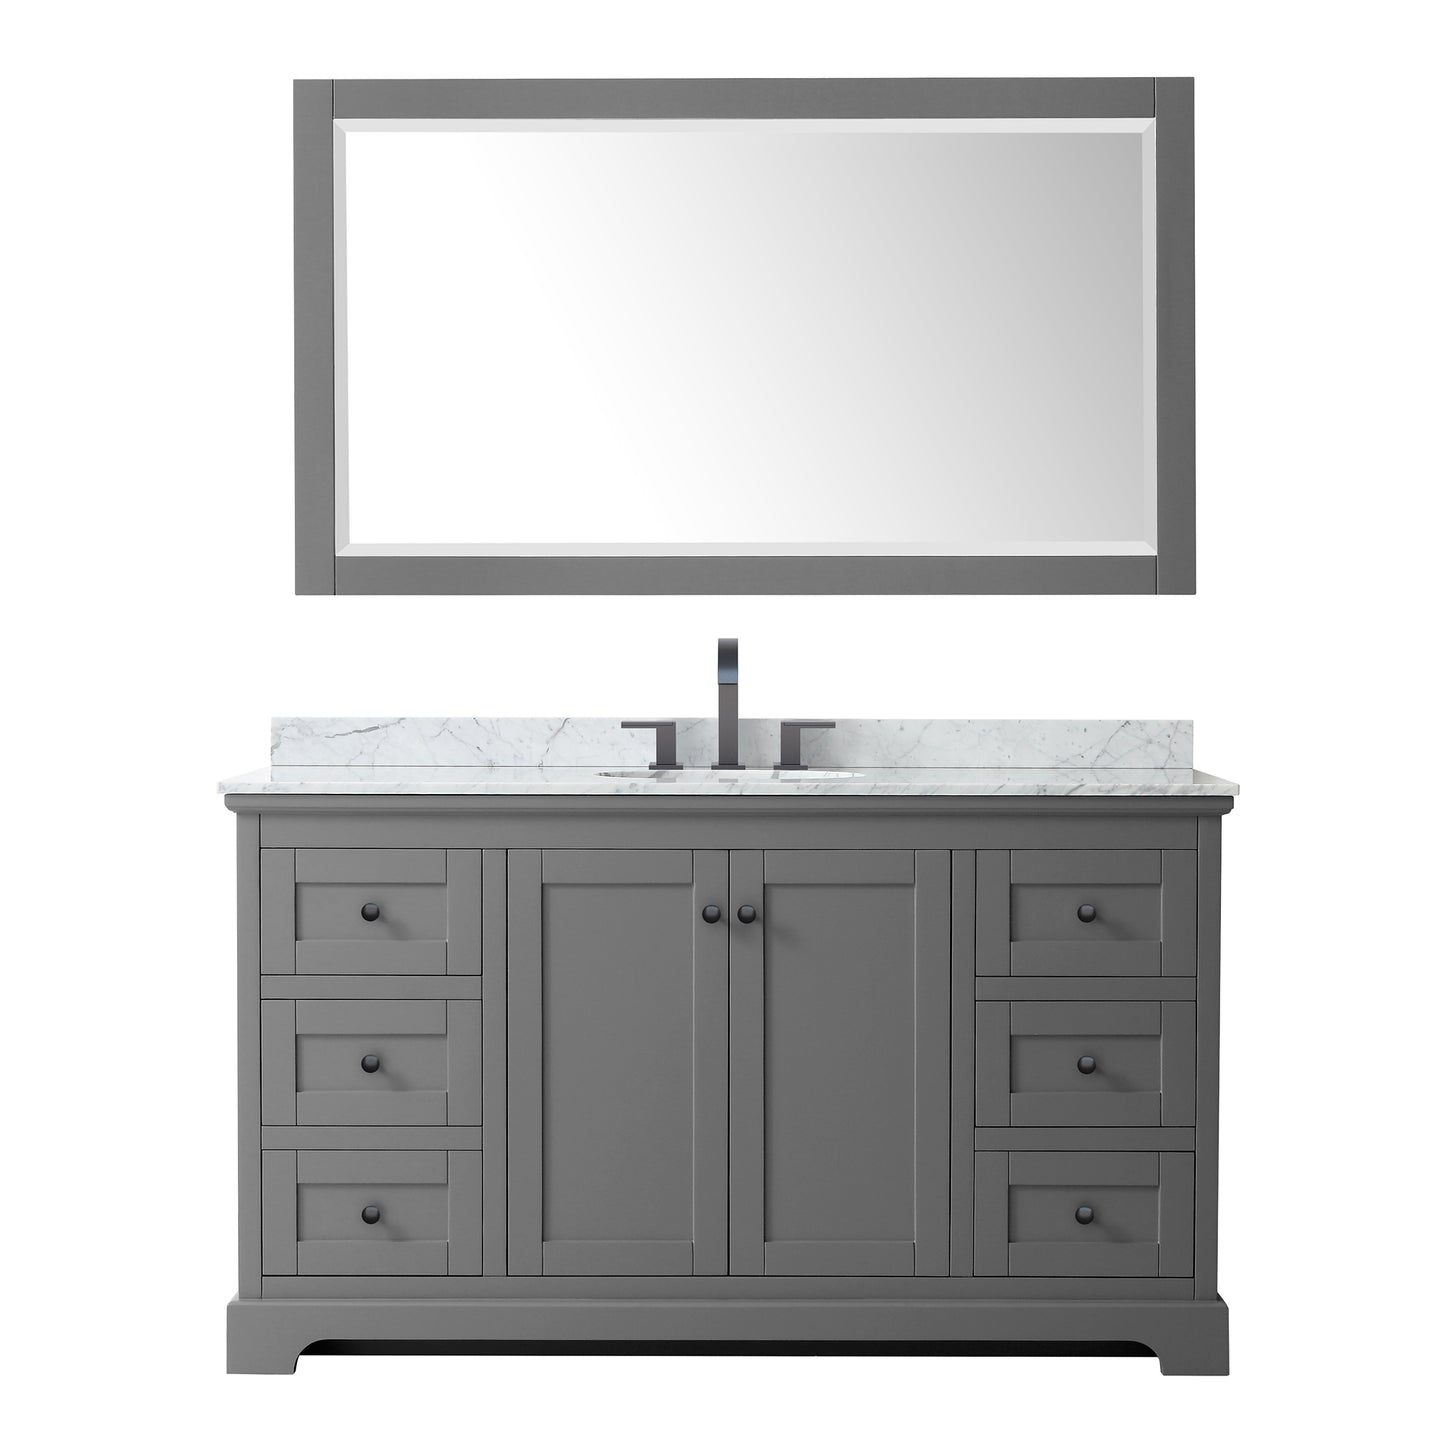 Wyndham Avery 60 Inch Single Bathroom Vanity White Carrara Marble Countertop, Undermount Oval Sink in Matte Black Trim with 58 Inch Mirror - Luxe Bathroom Vanities